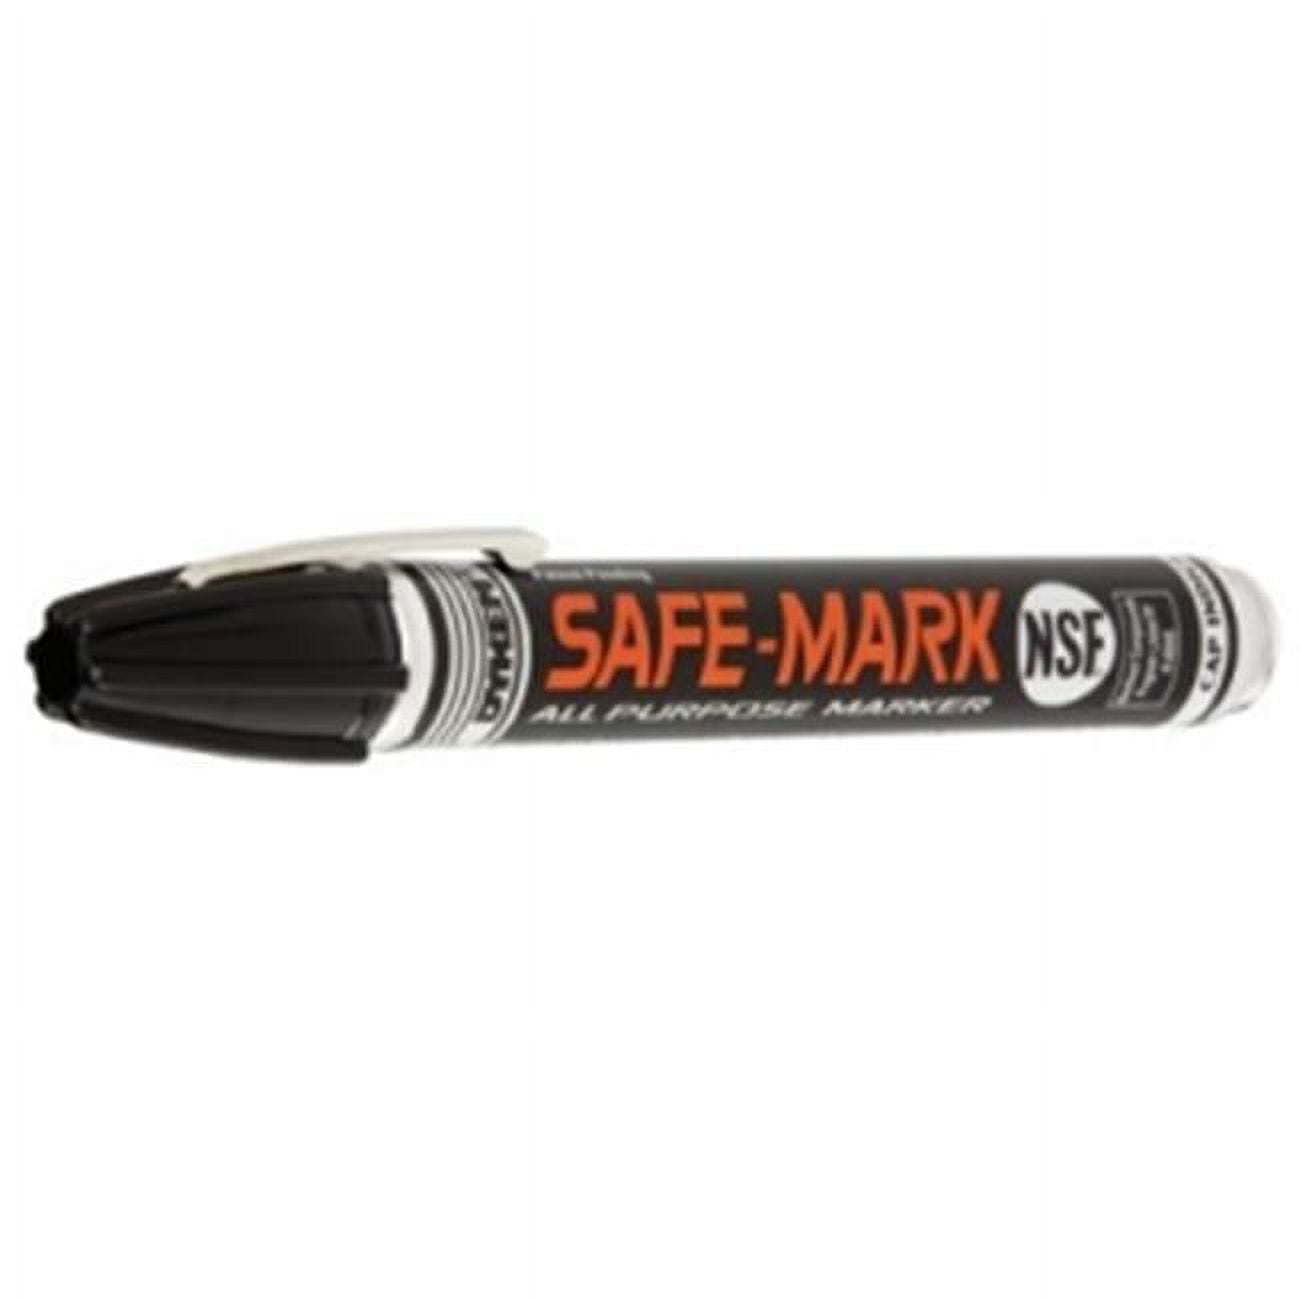 3 Pack Extra Long Tip Long Head Marker Pens Waterproof Permanent